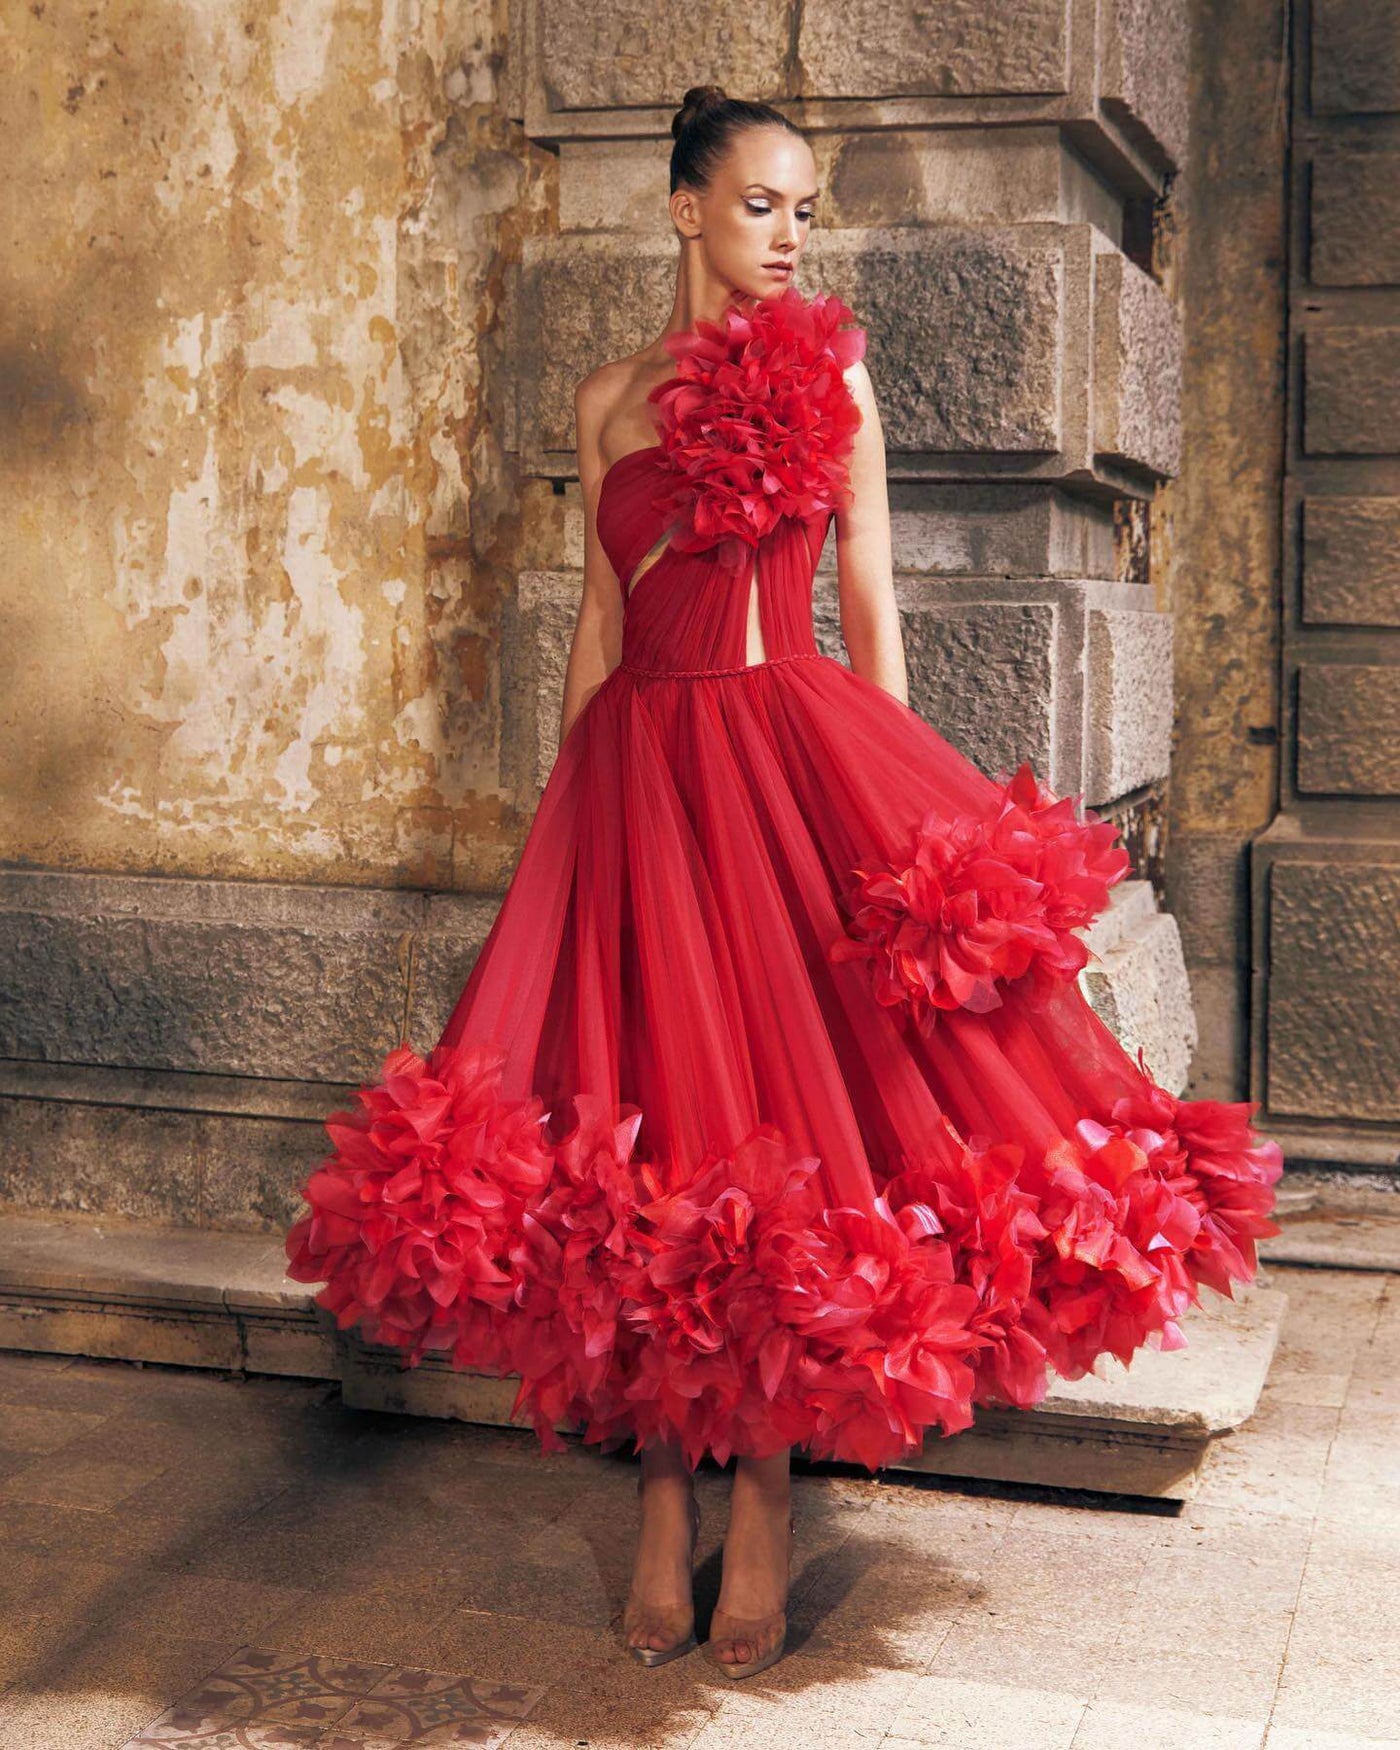 Elegant Diagonal Collar Sleeveless Long Gown Red Dress